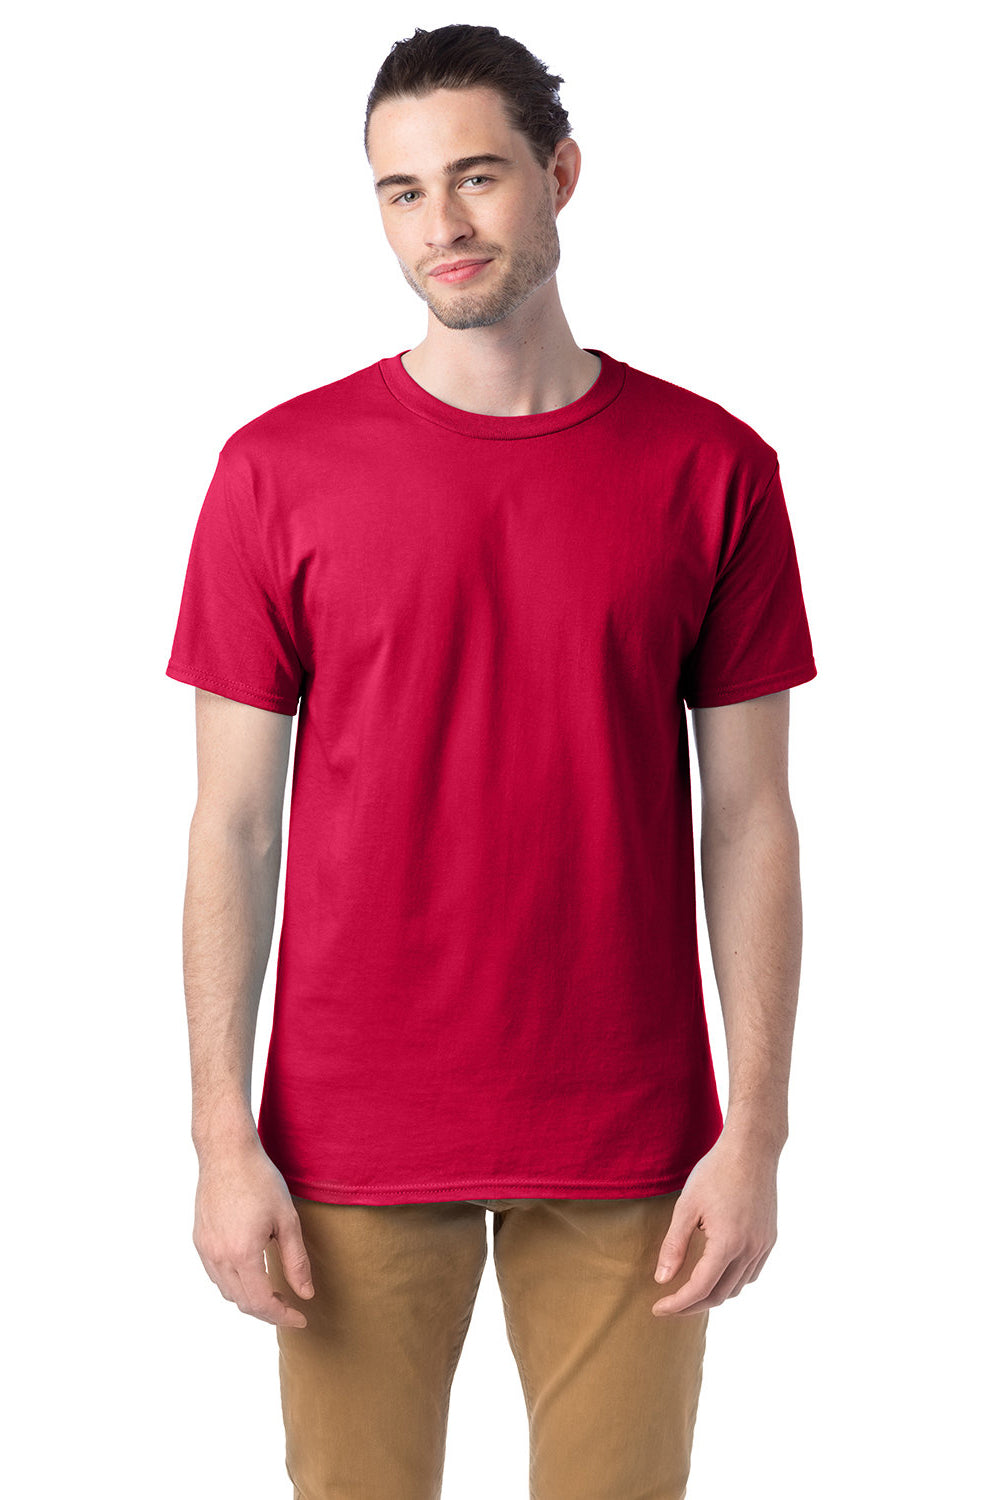 Hanes 5280 Mens ComfortSoft Short Sleeve Crewneck T-Shirt Athletic Crimson Red Front